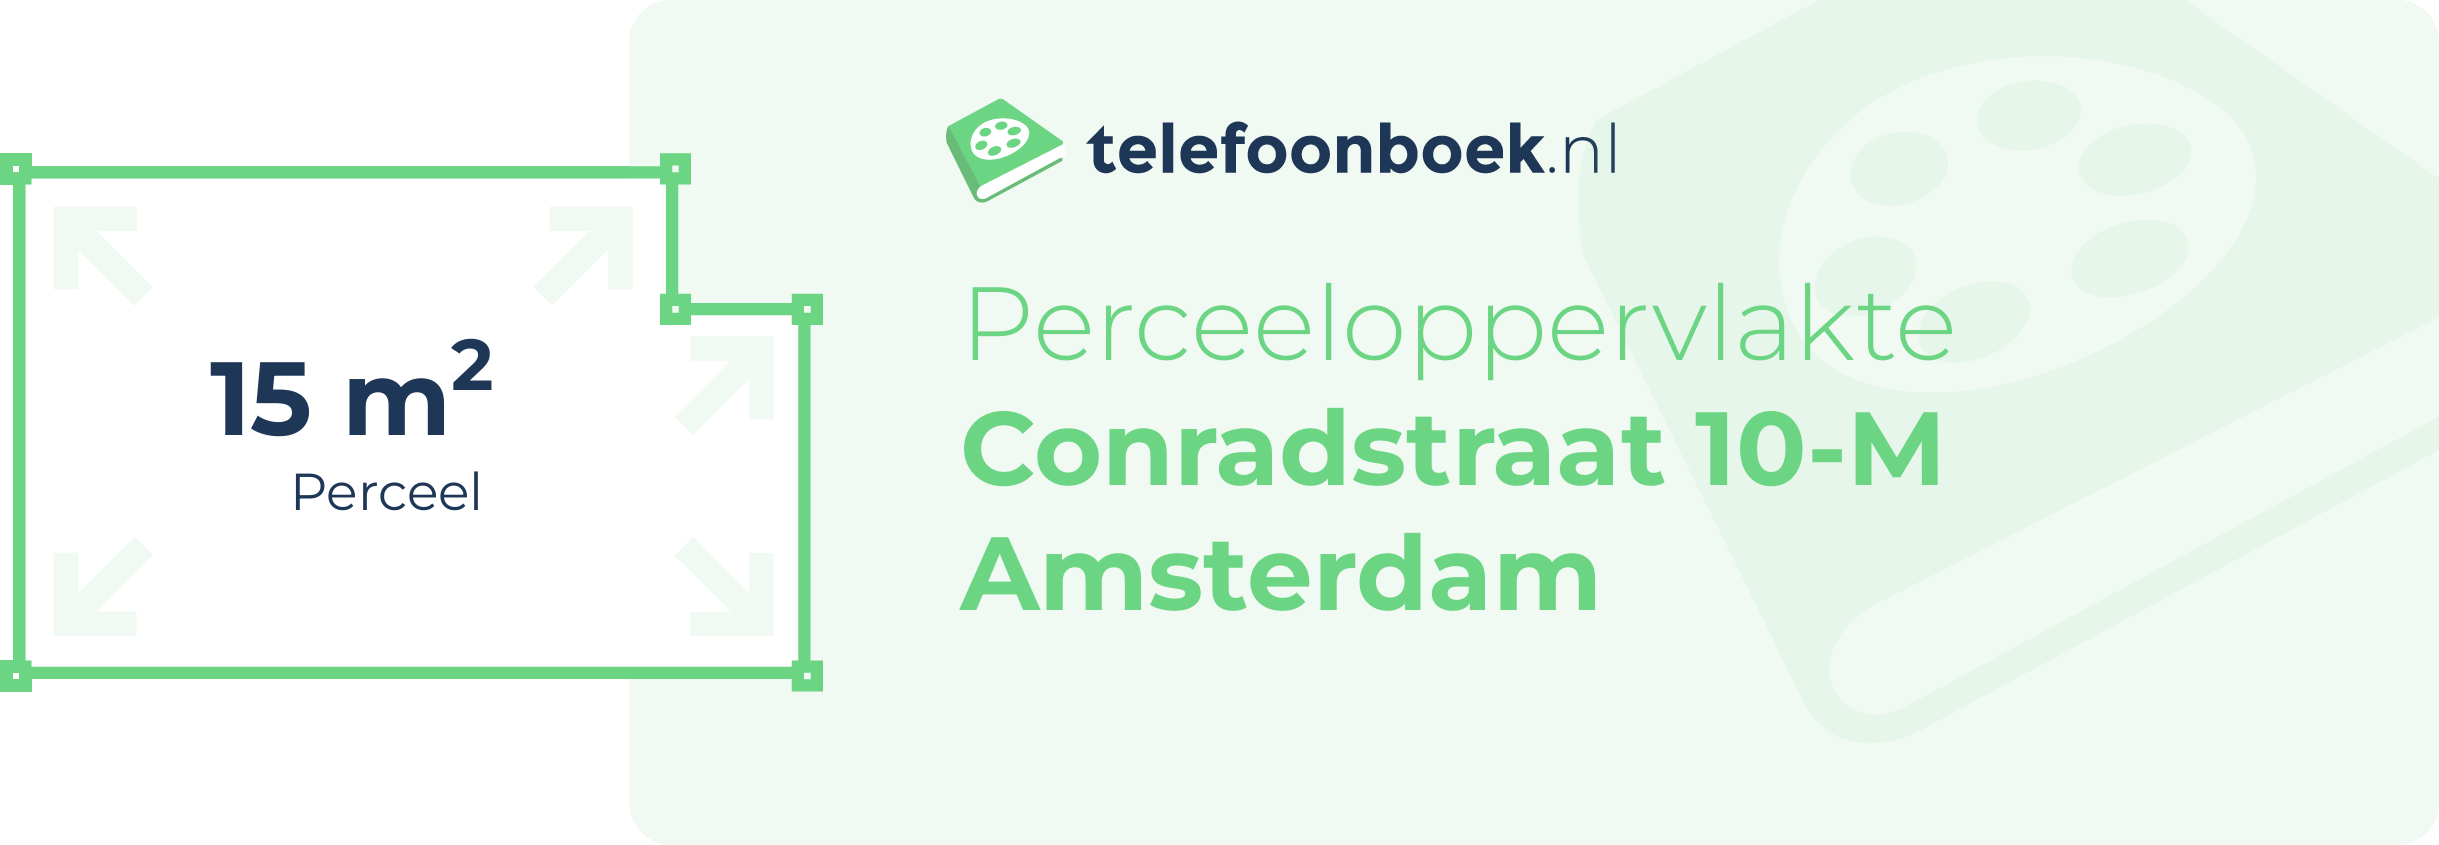 Perceeloppervlakte Conradstraat 10-M Amsterdam